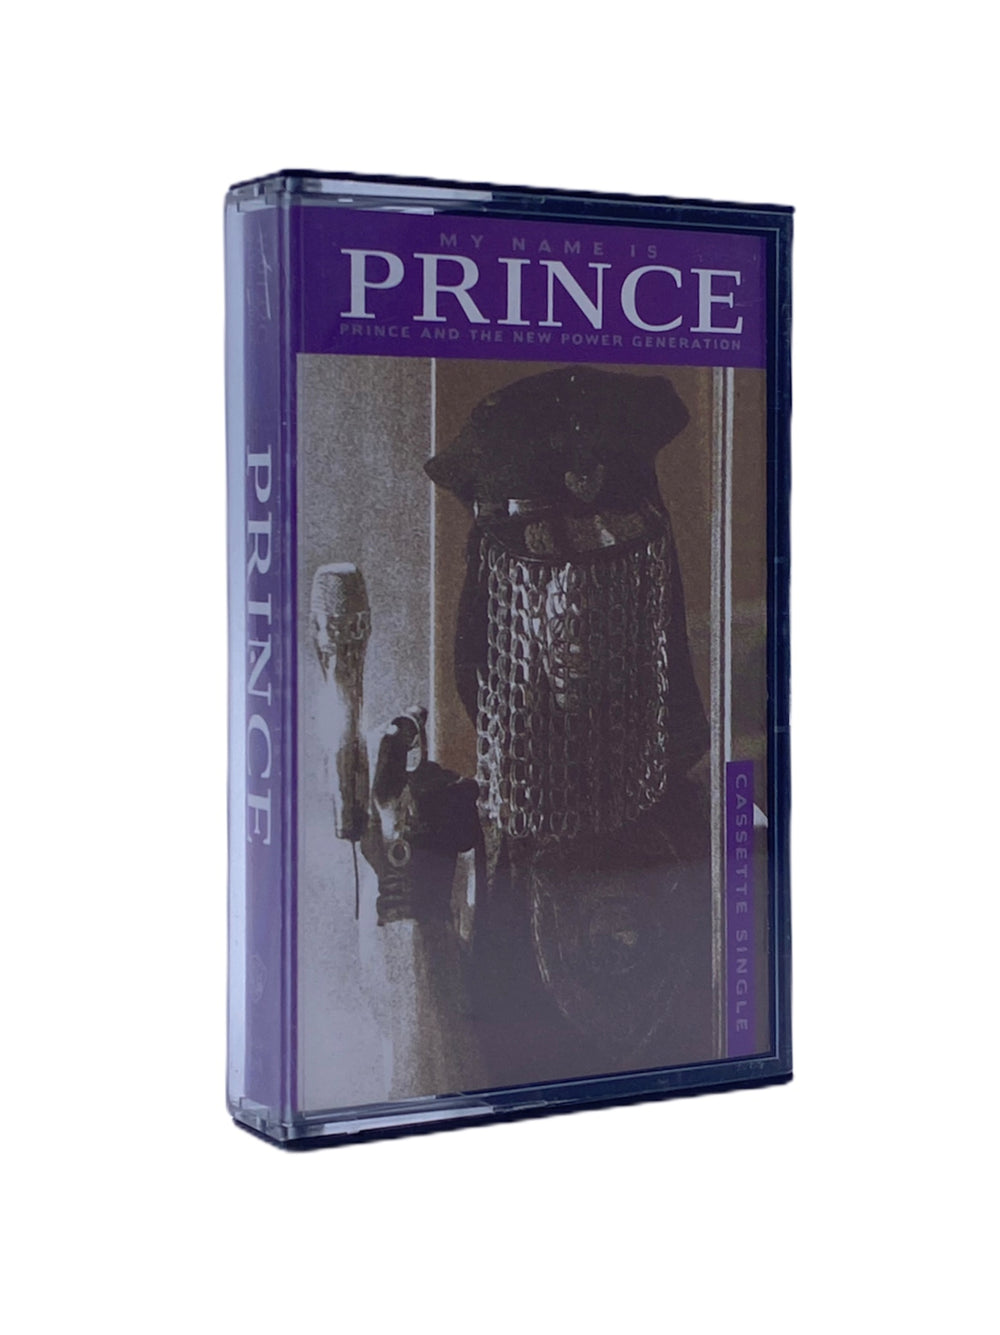 Prince – My Name Is Prince Cassette Single UK Preloved: 1992